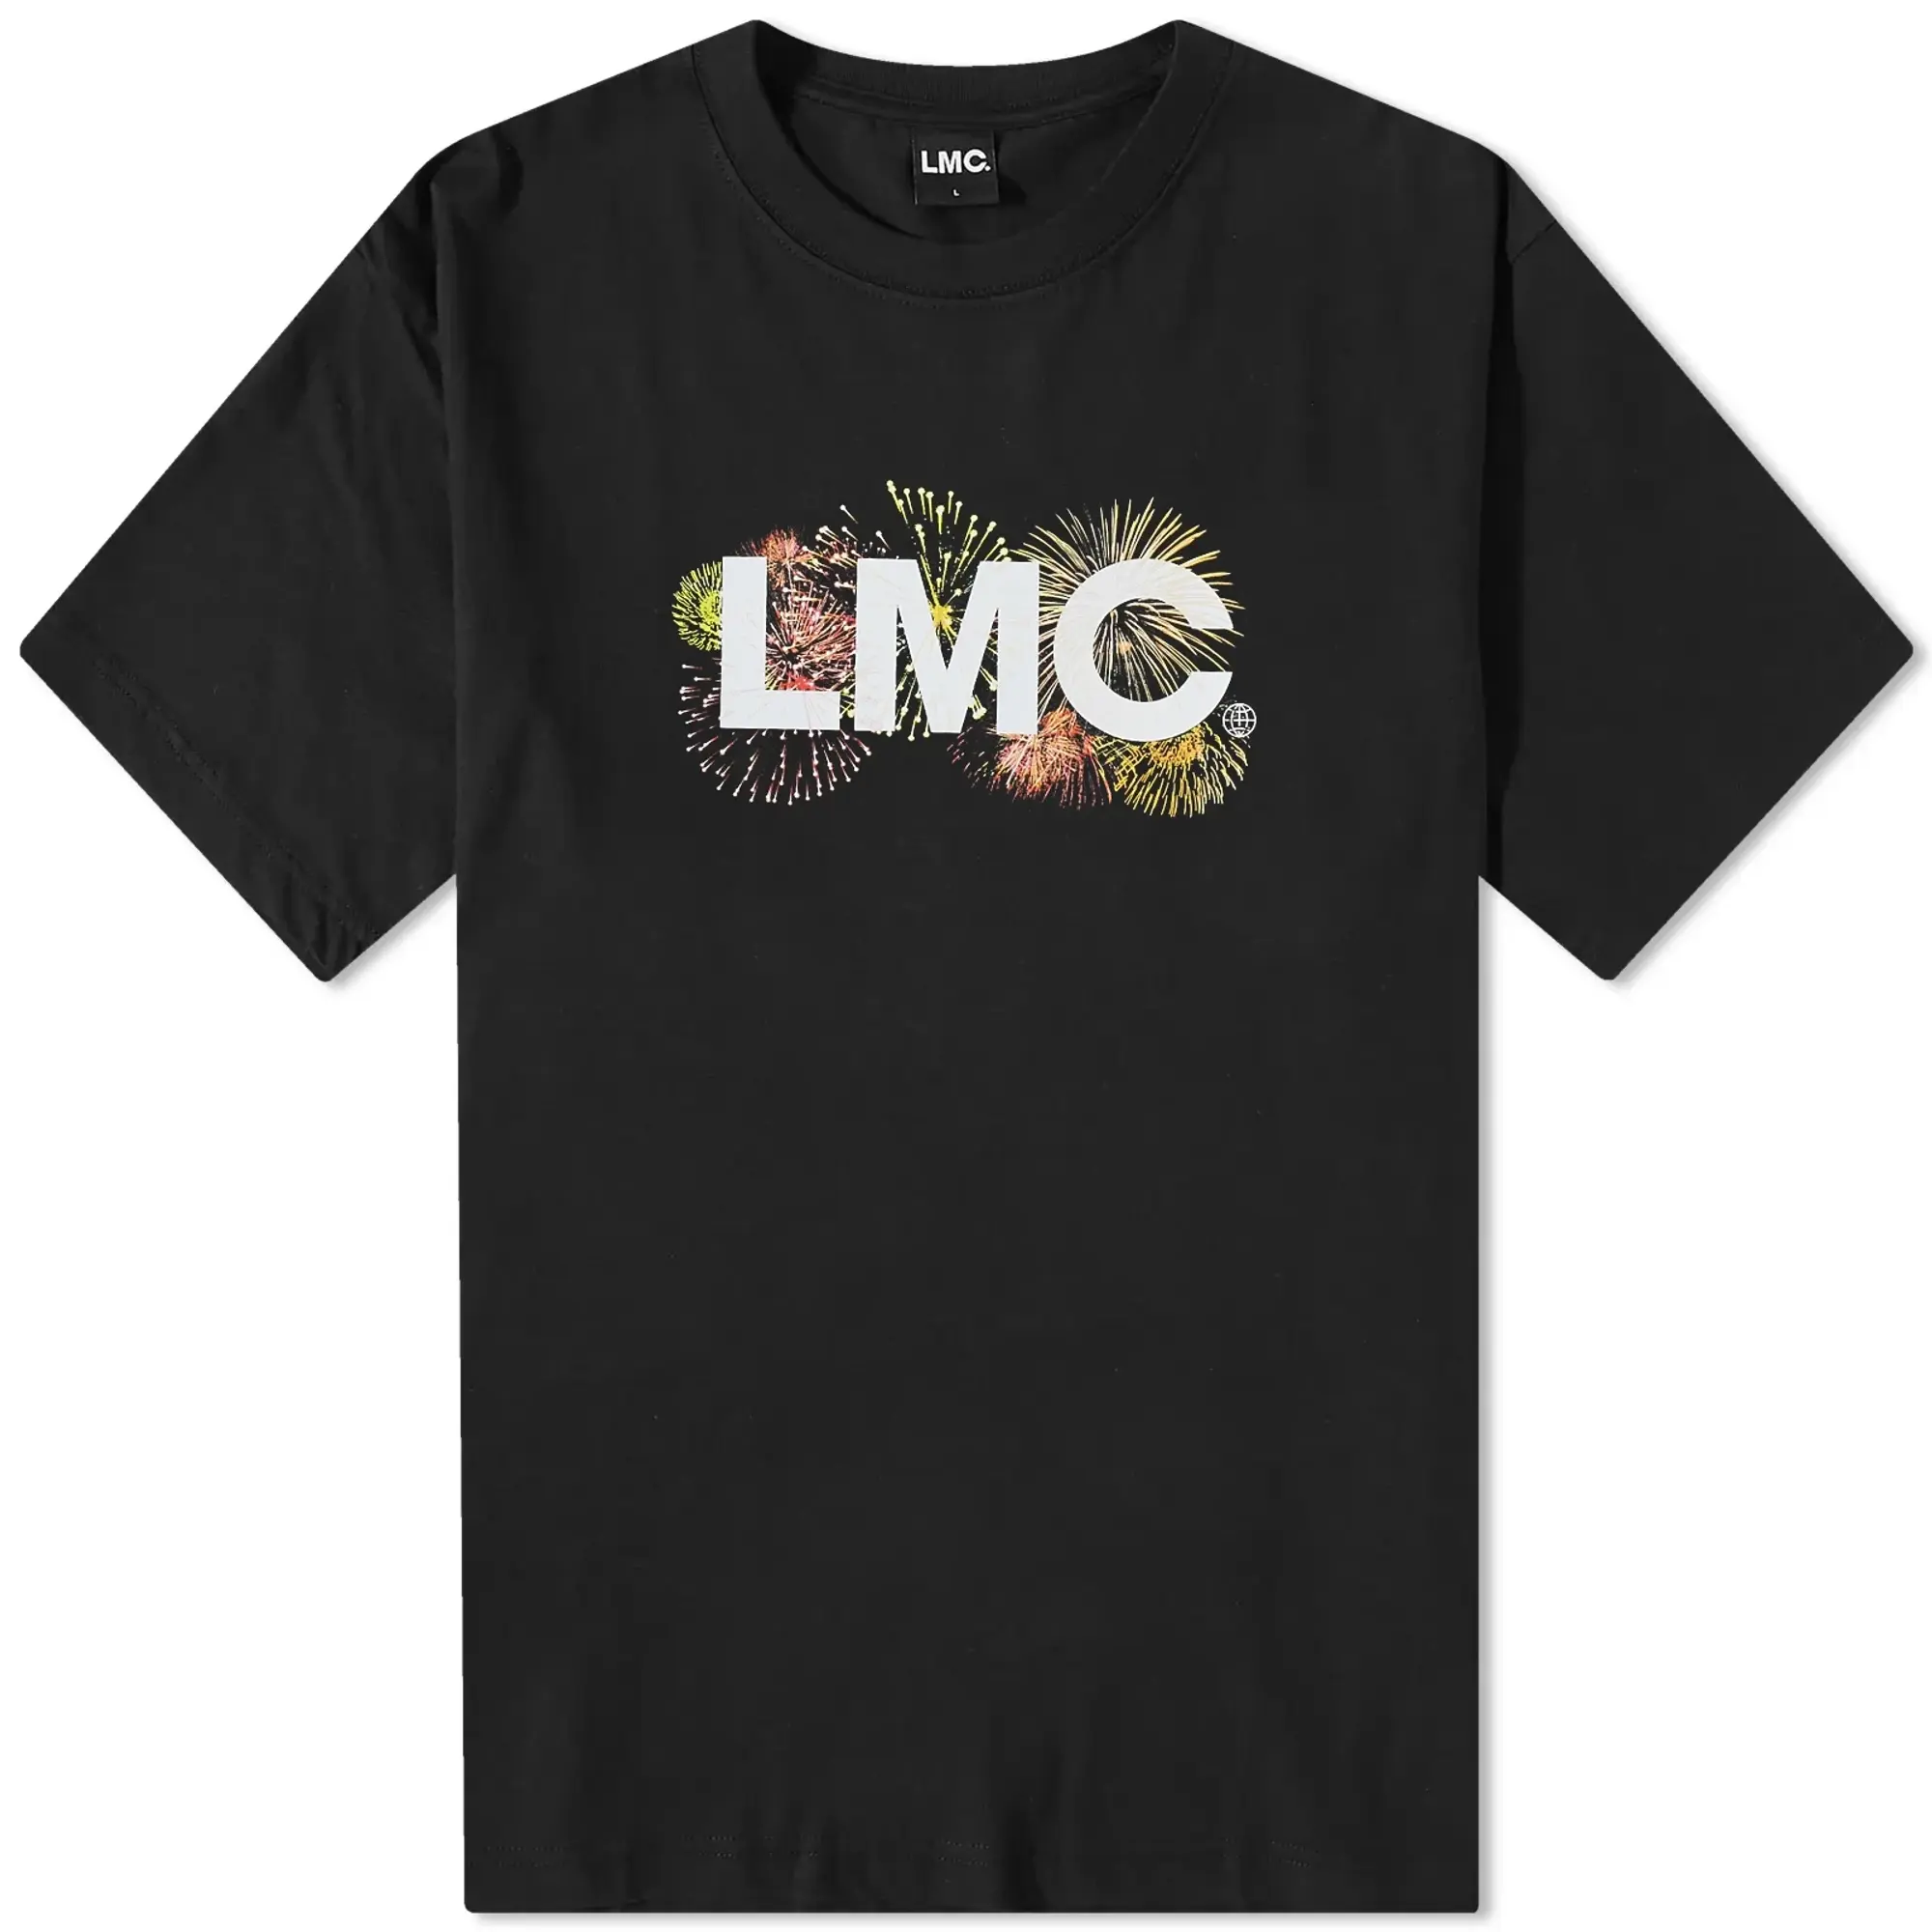 LMC Men's Firework T-Shirt Black